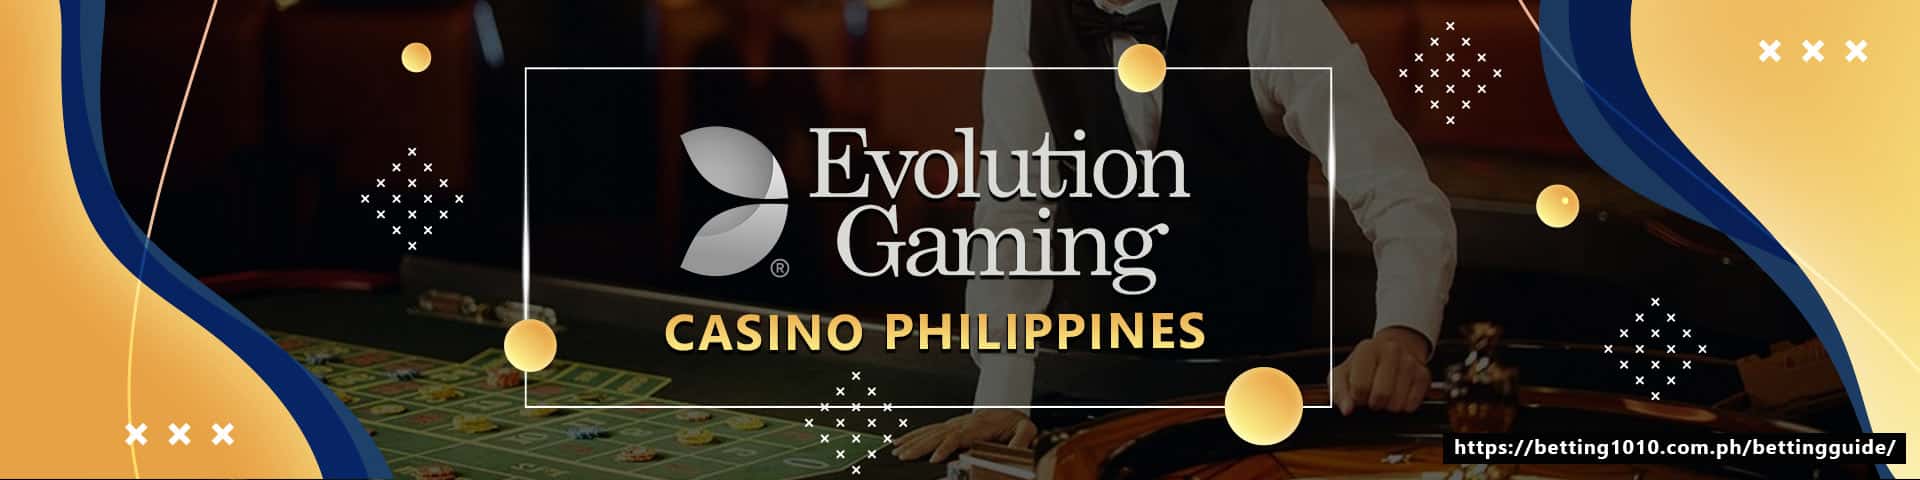 Evolution Gaming Casino Philippines